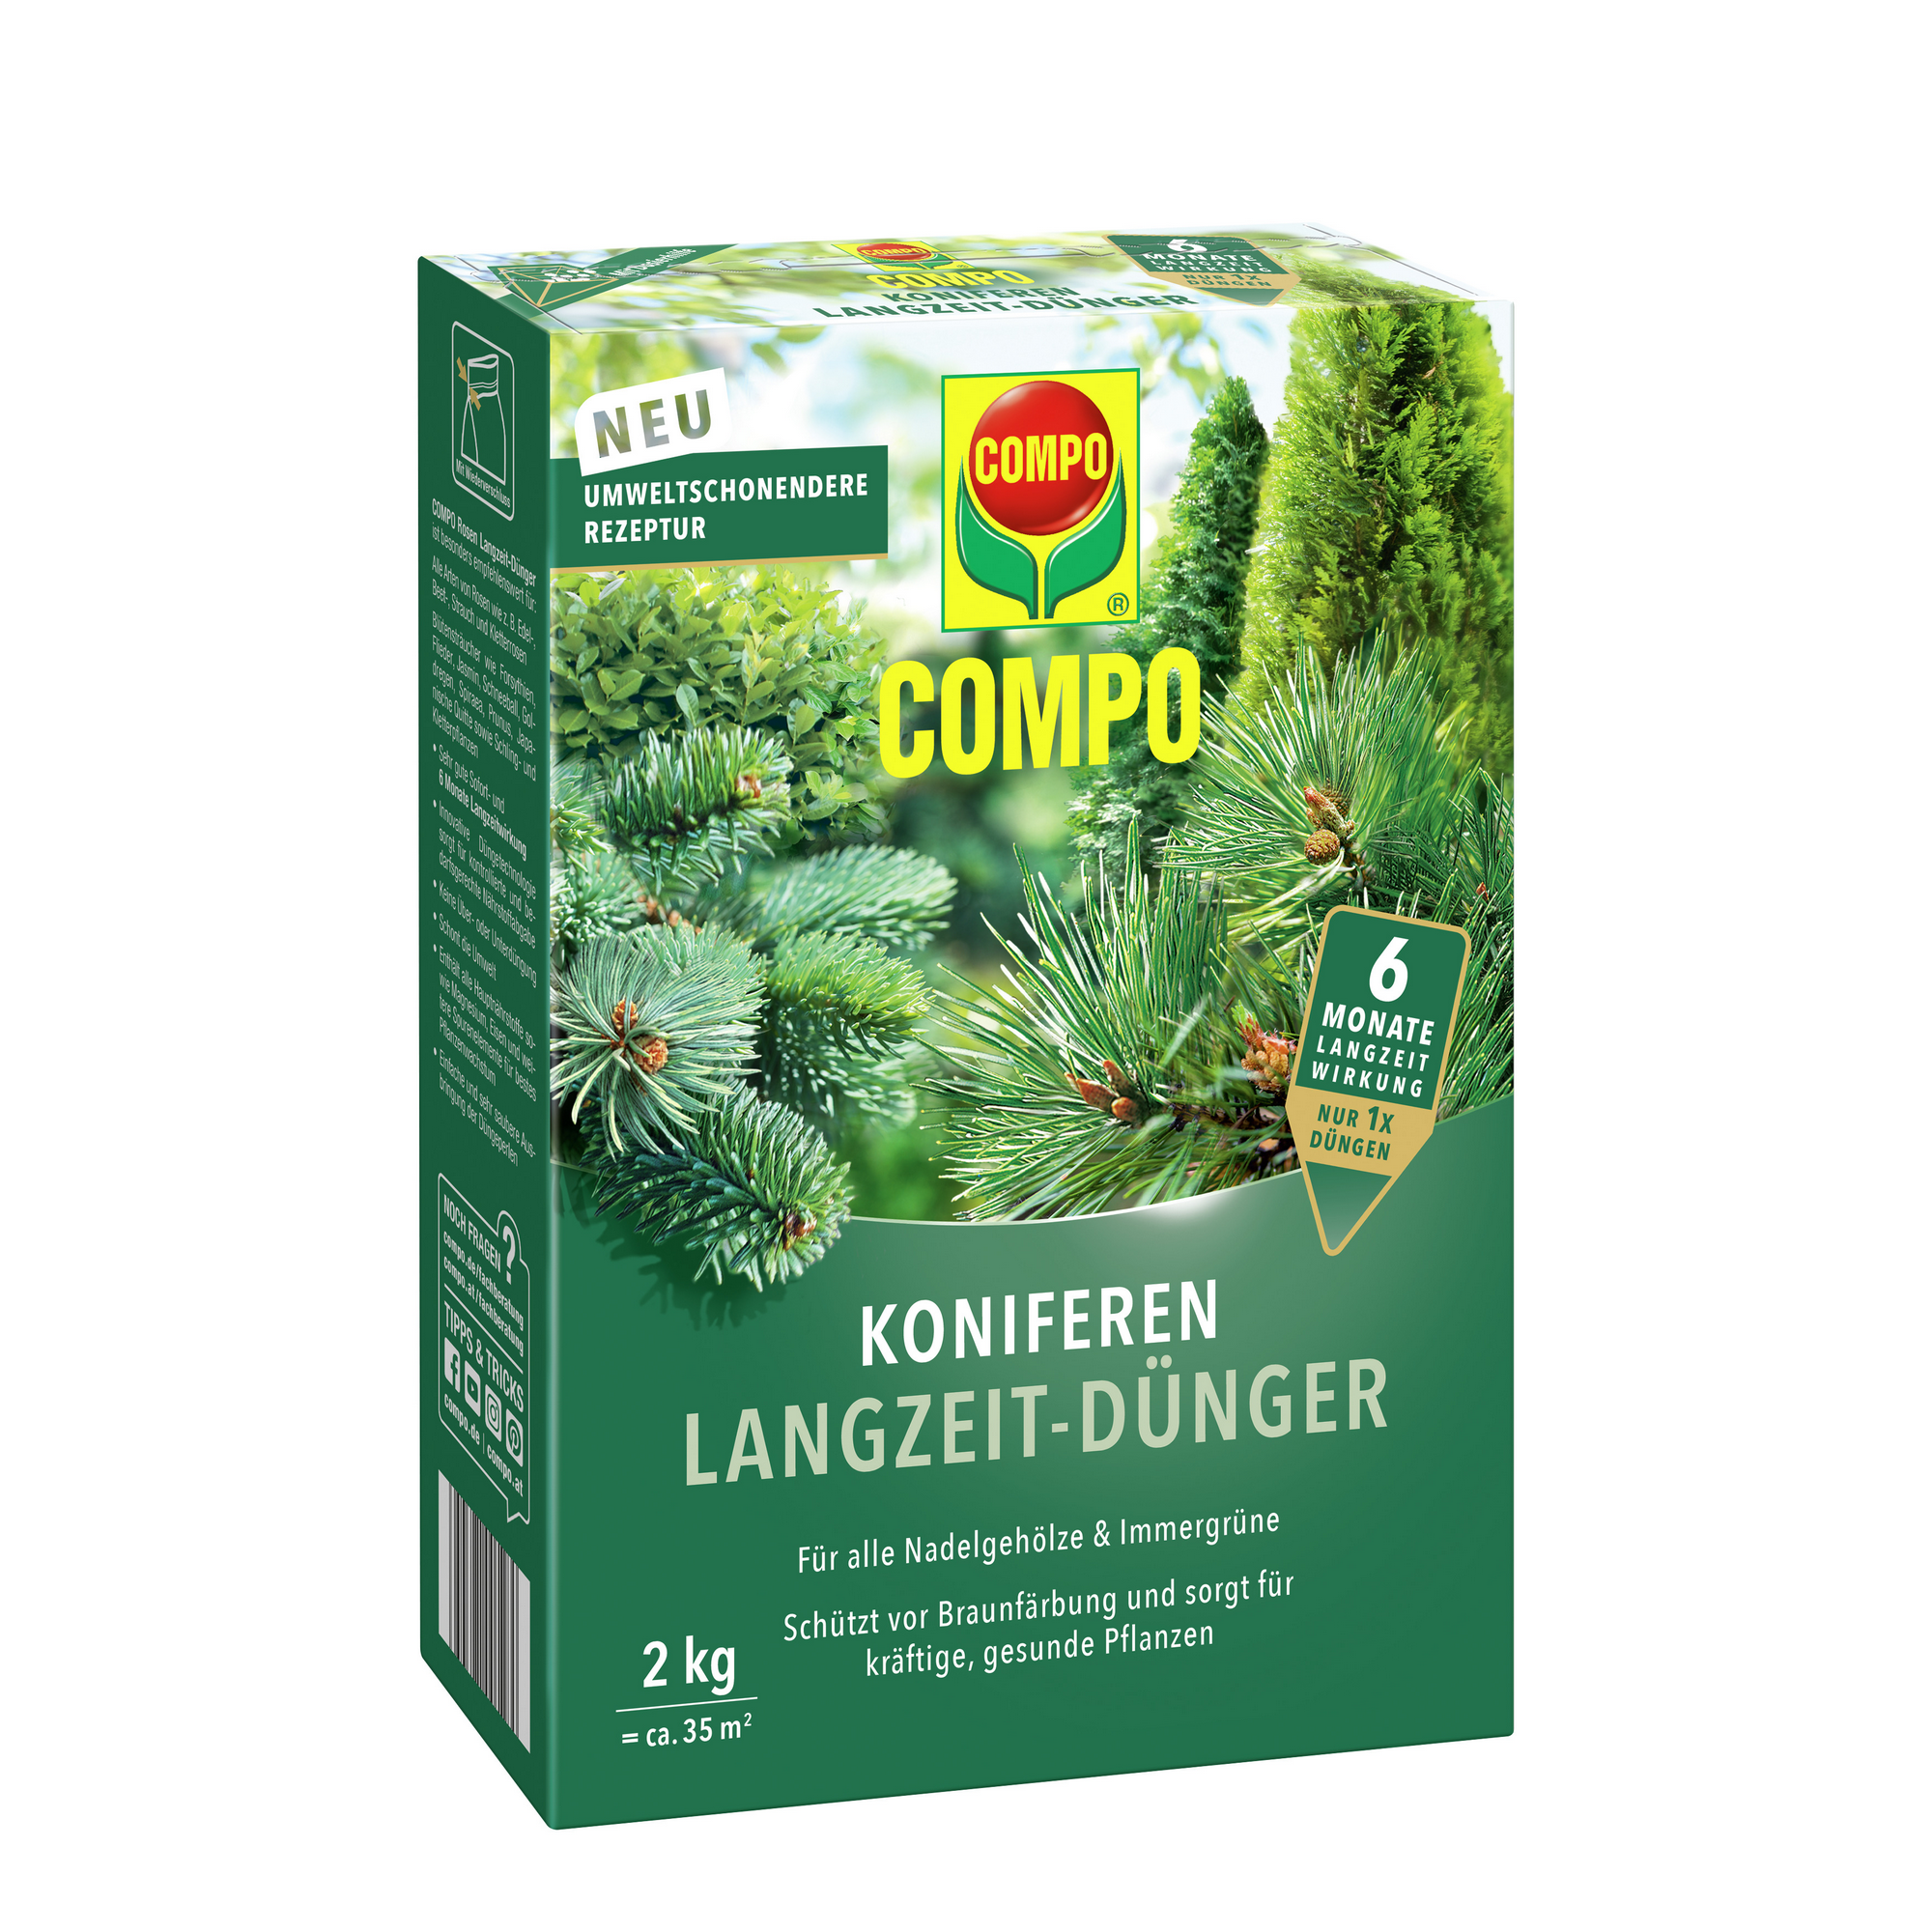 Koniferen-Langzeitdünger 2 kg + product picture